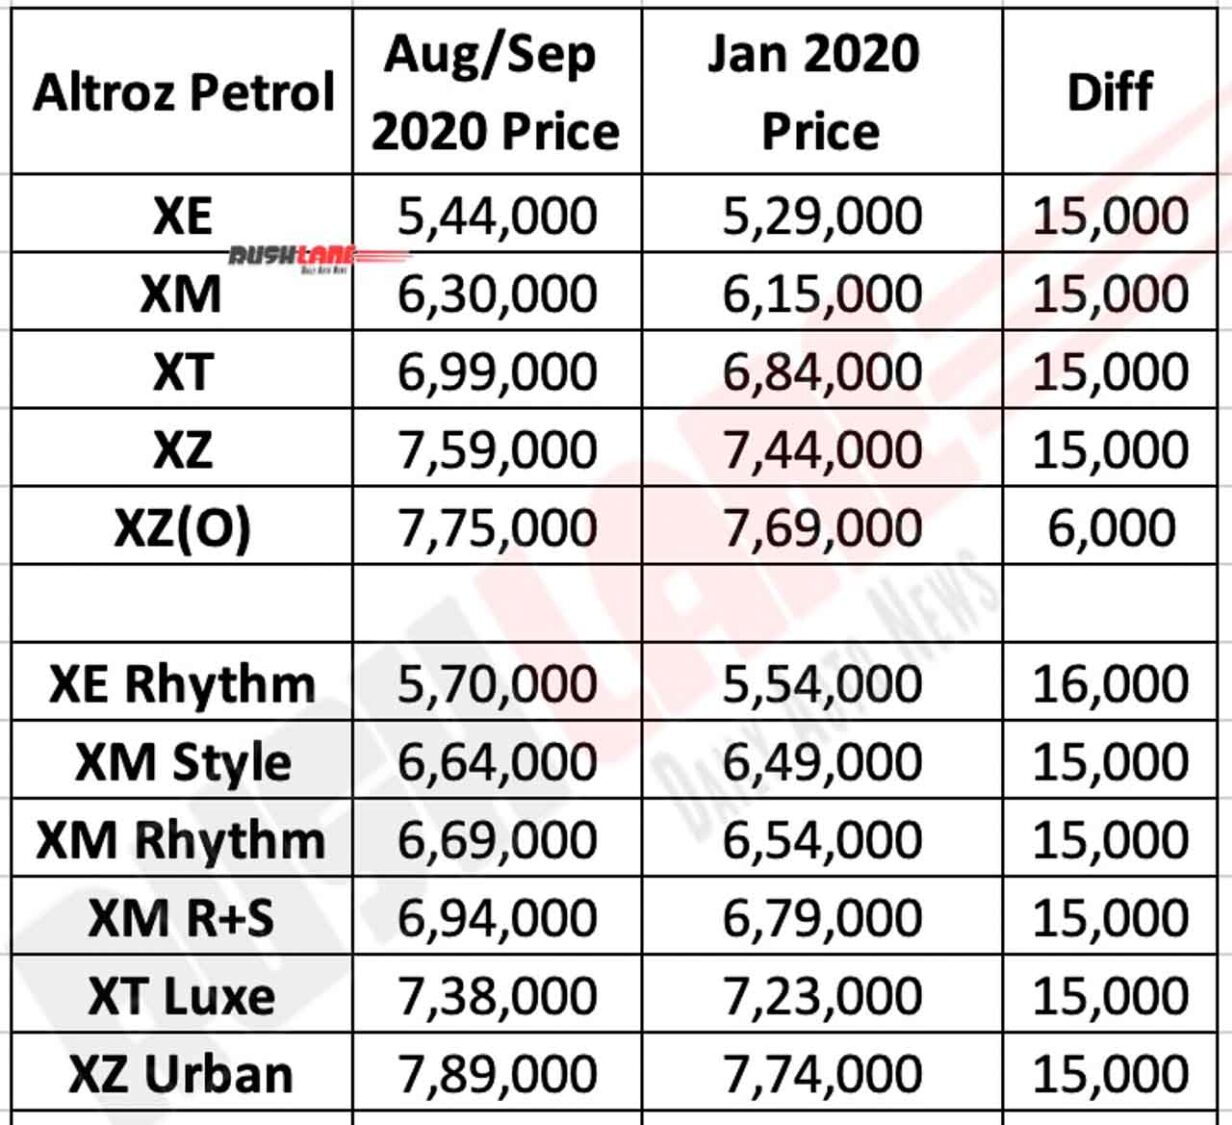 Tata Altroz Petrol Prices Sep 2020